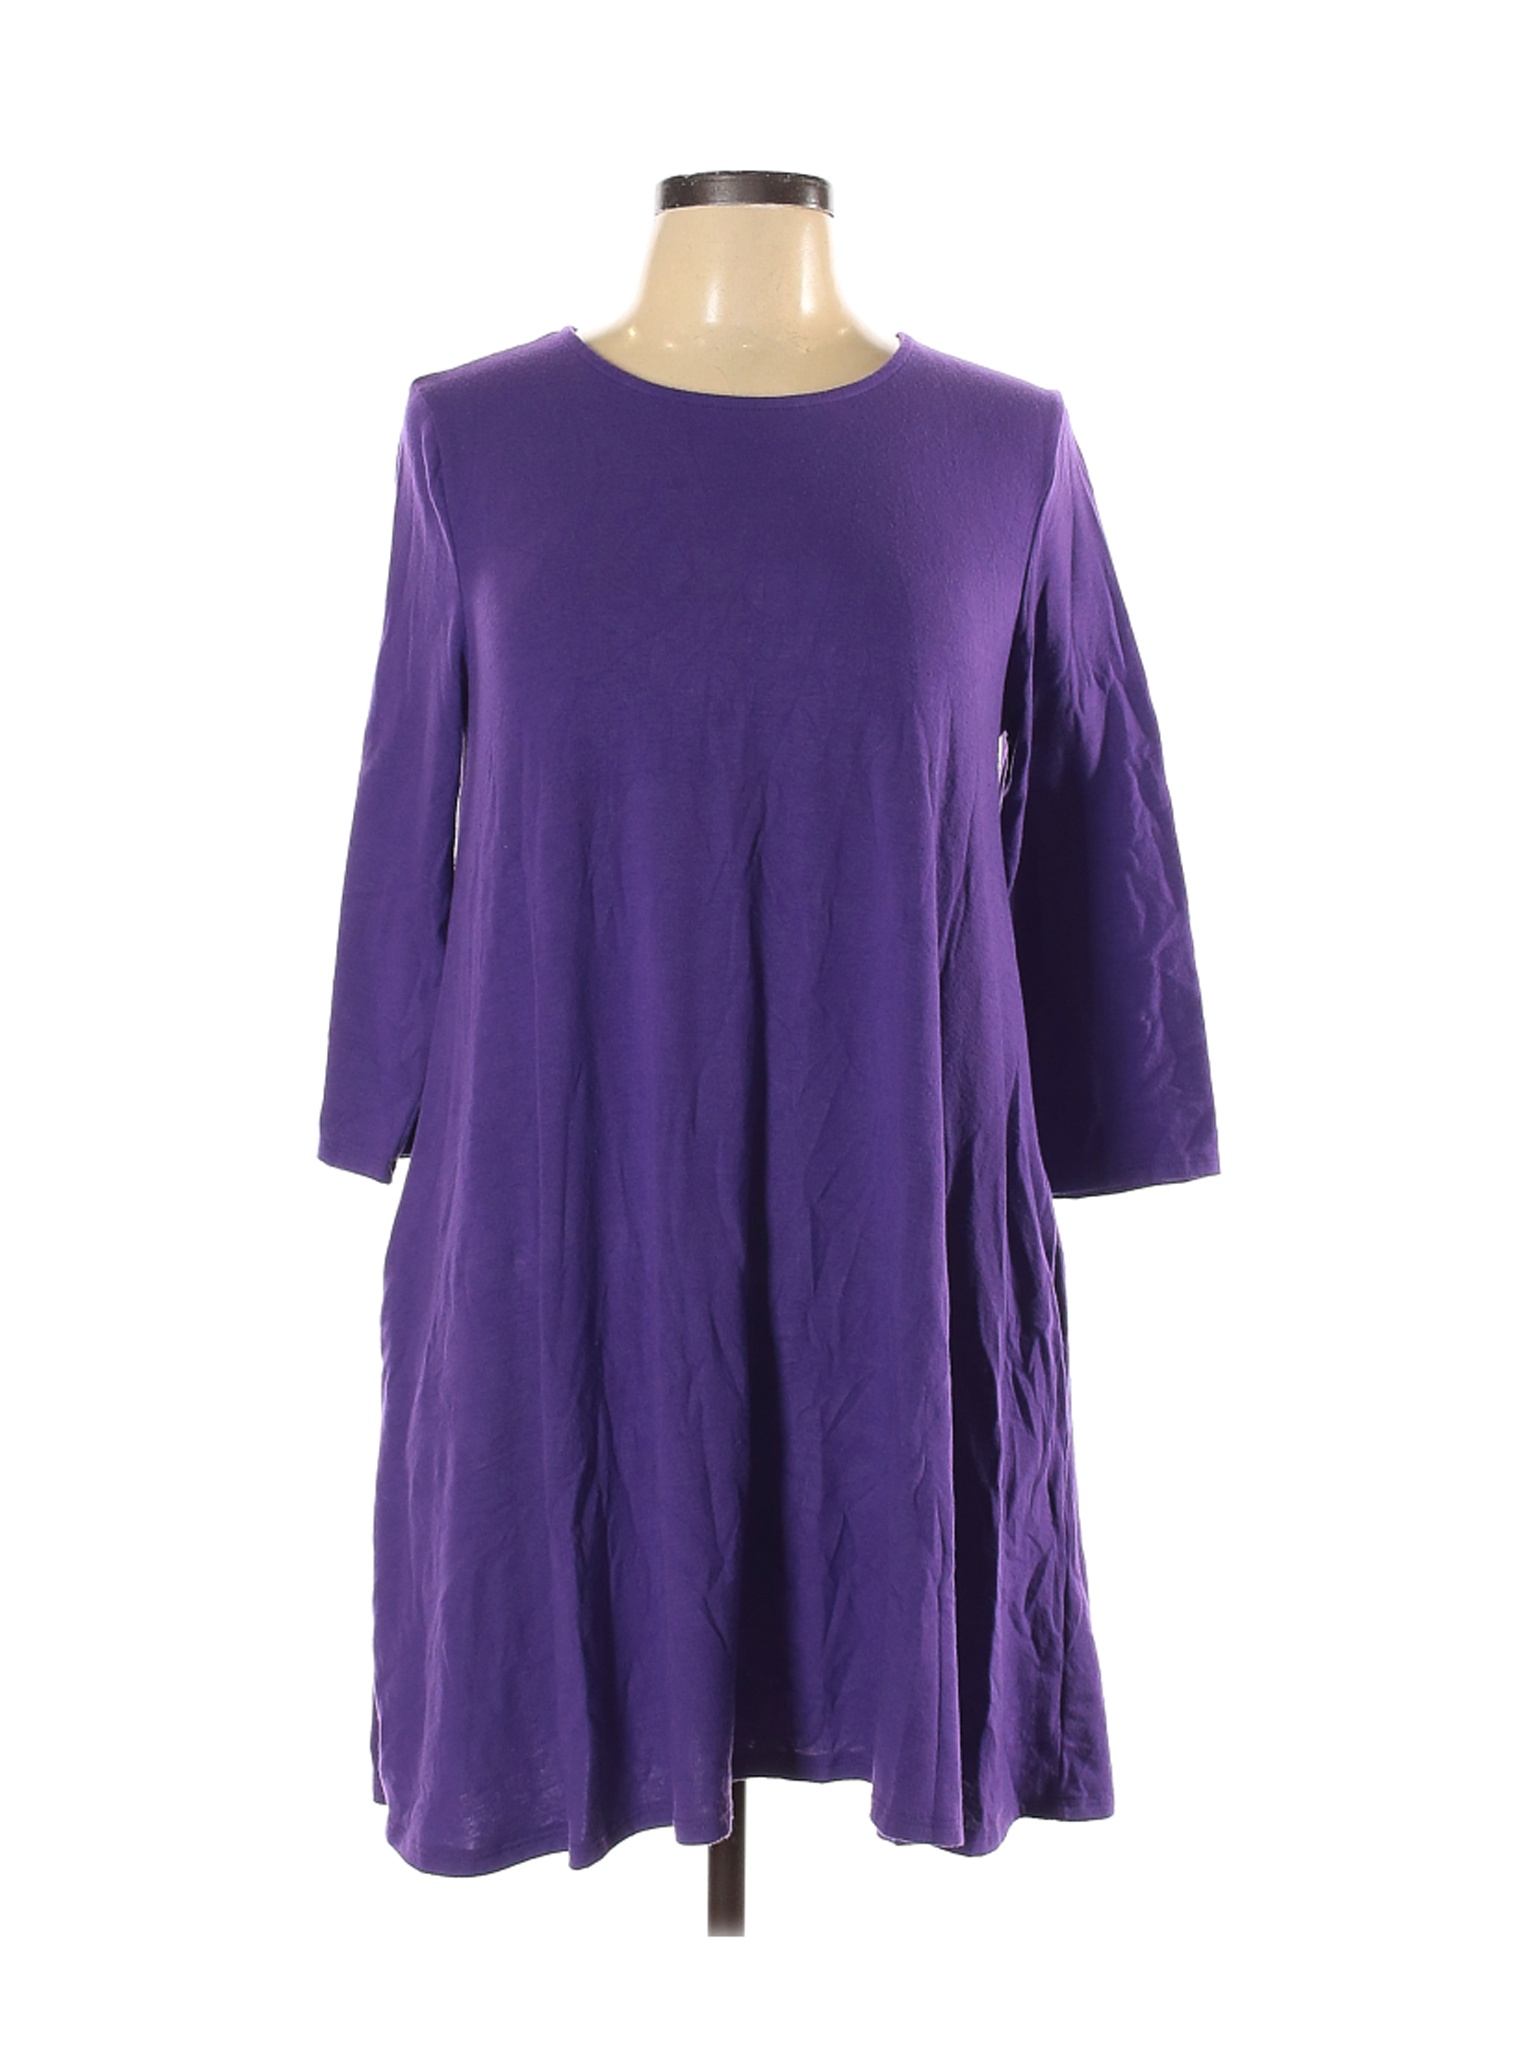 Zenana Premium Women Purple Casual Dress L | eBay